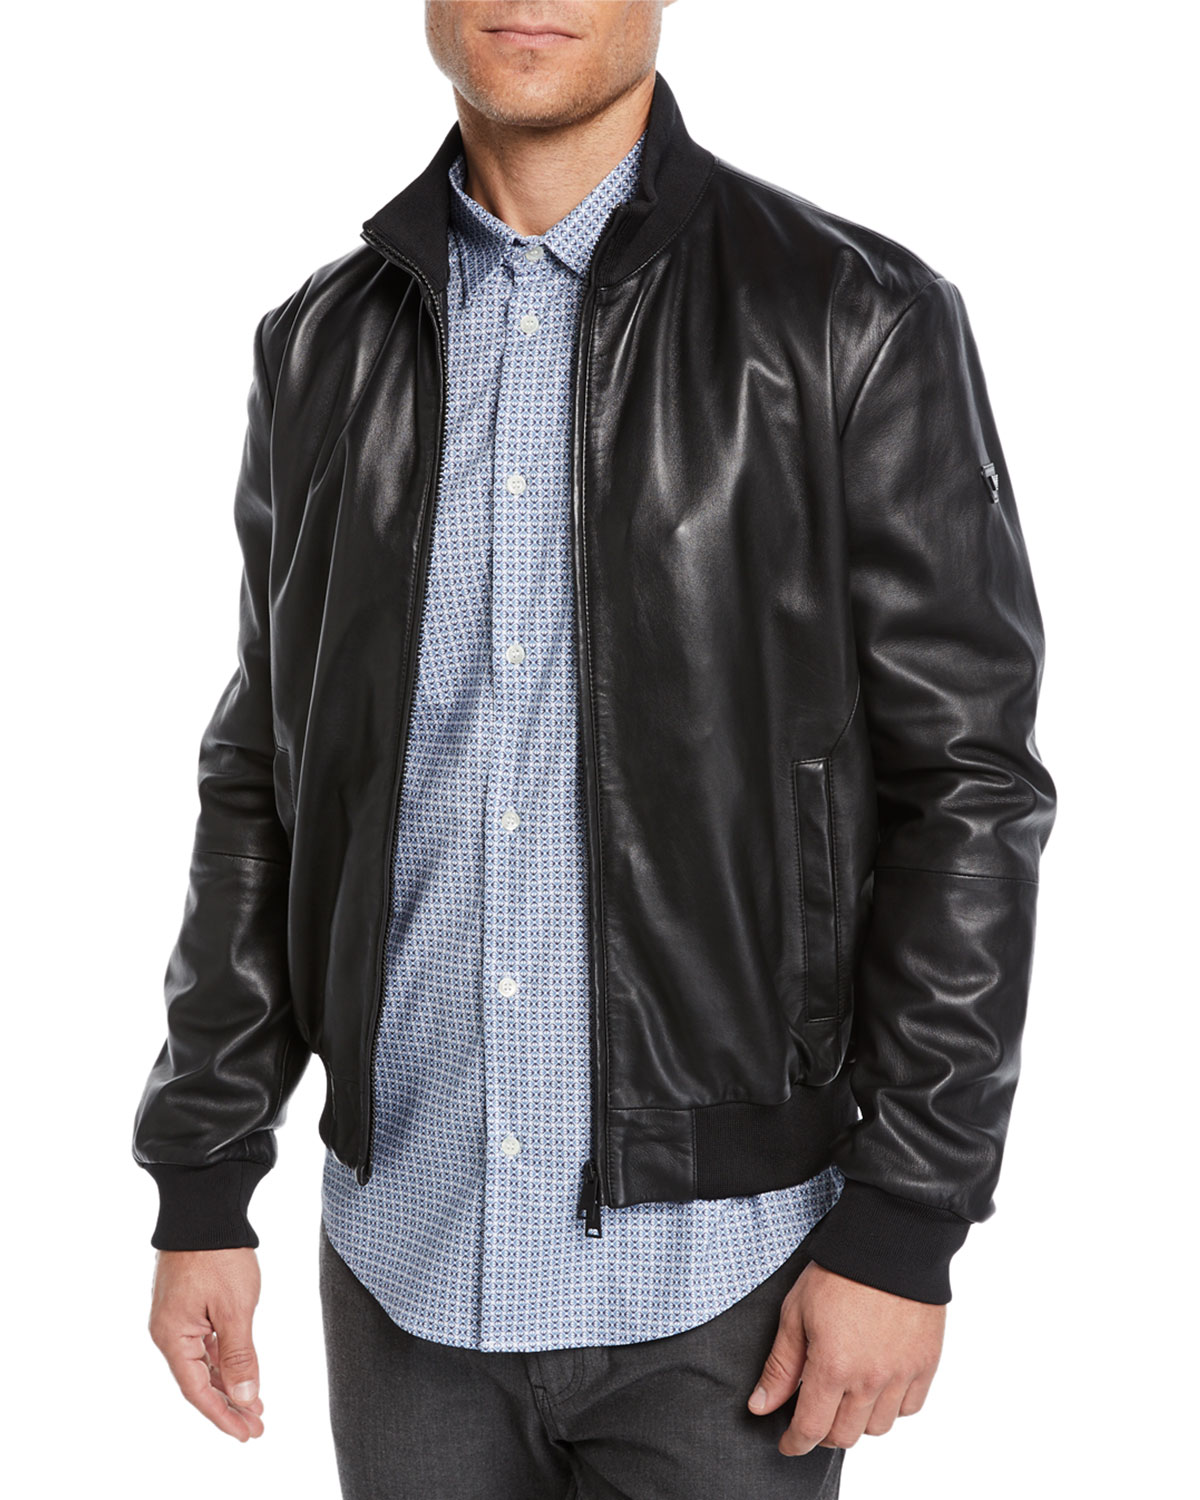 armani mens leather jackets